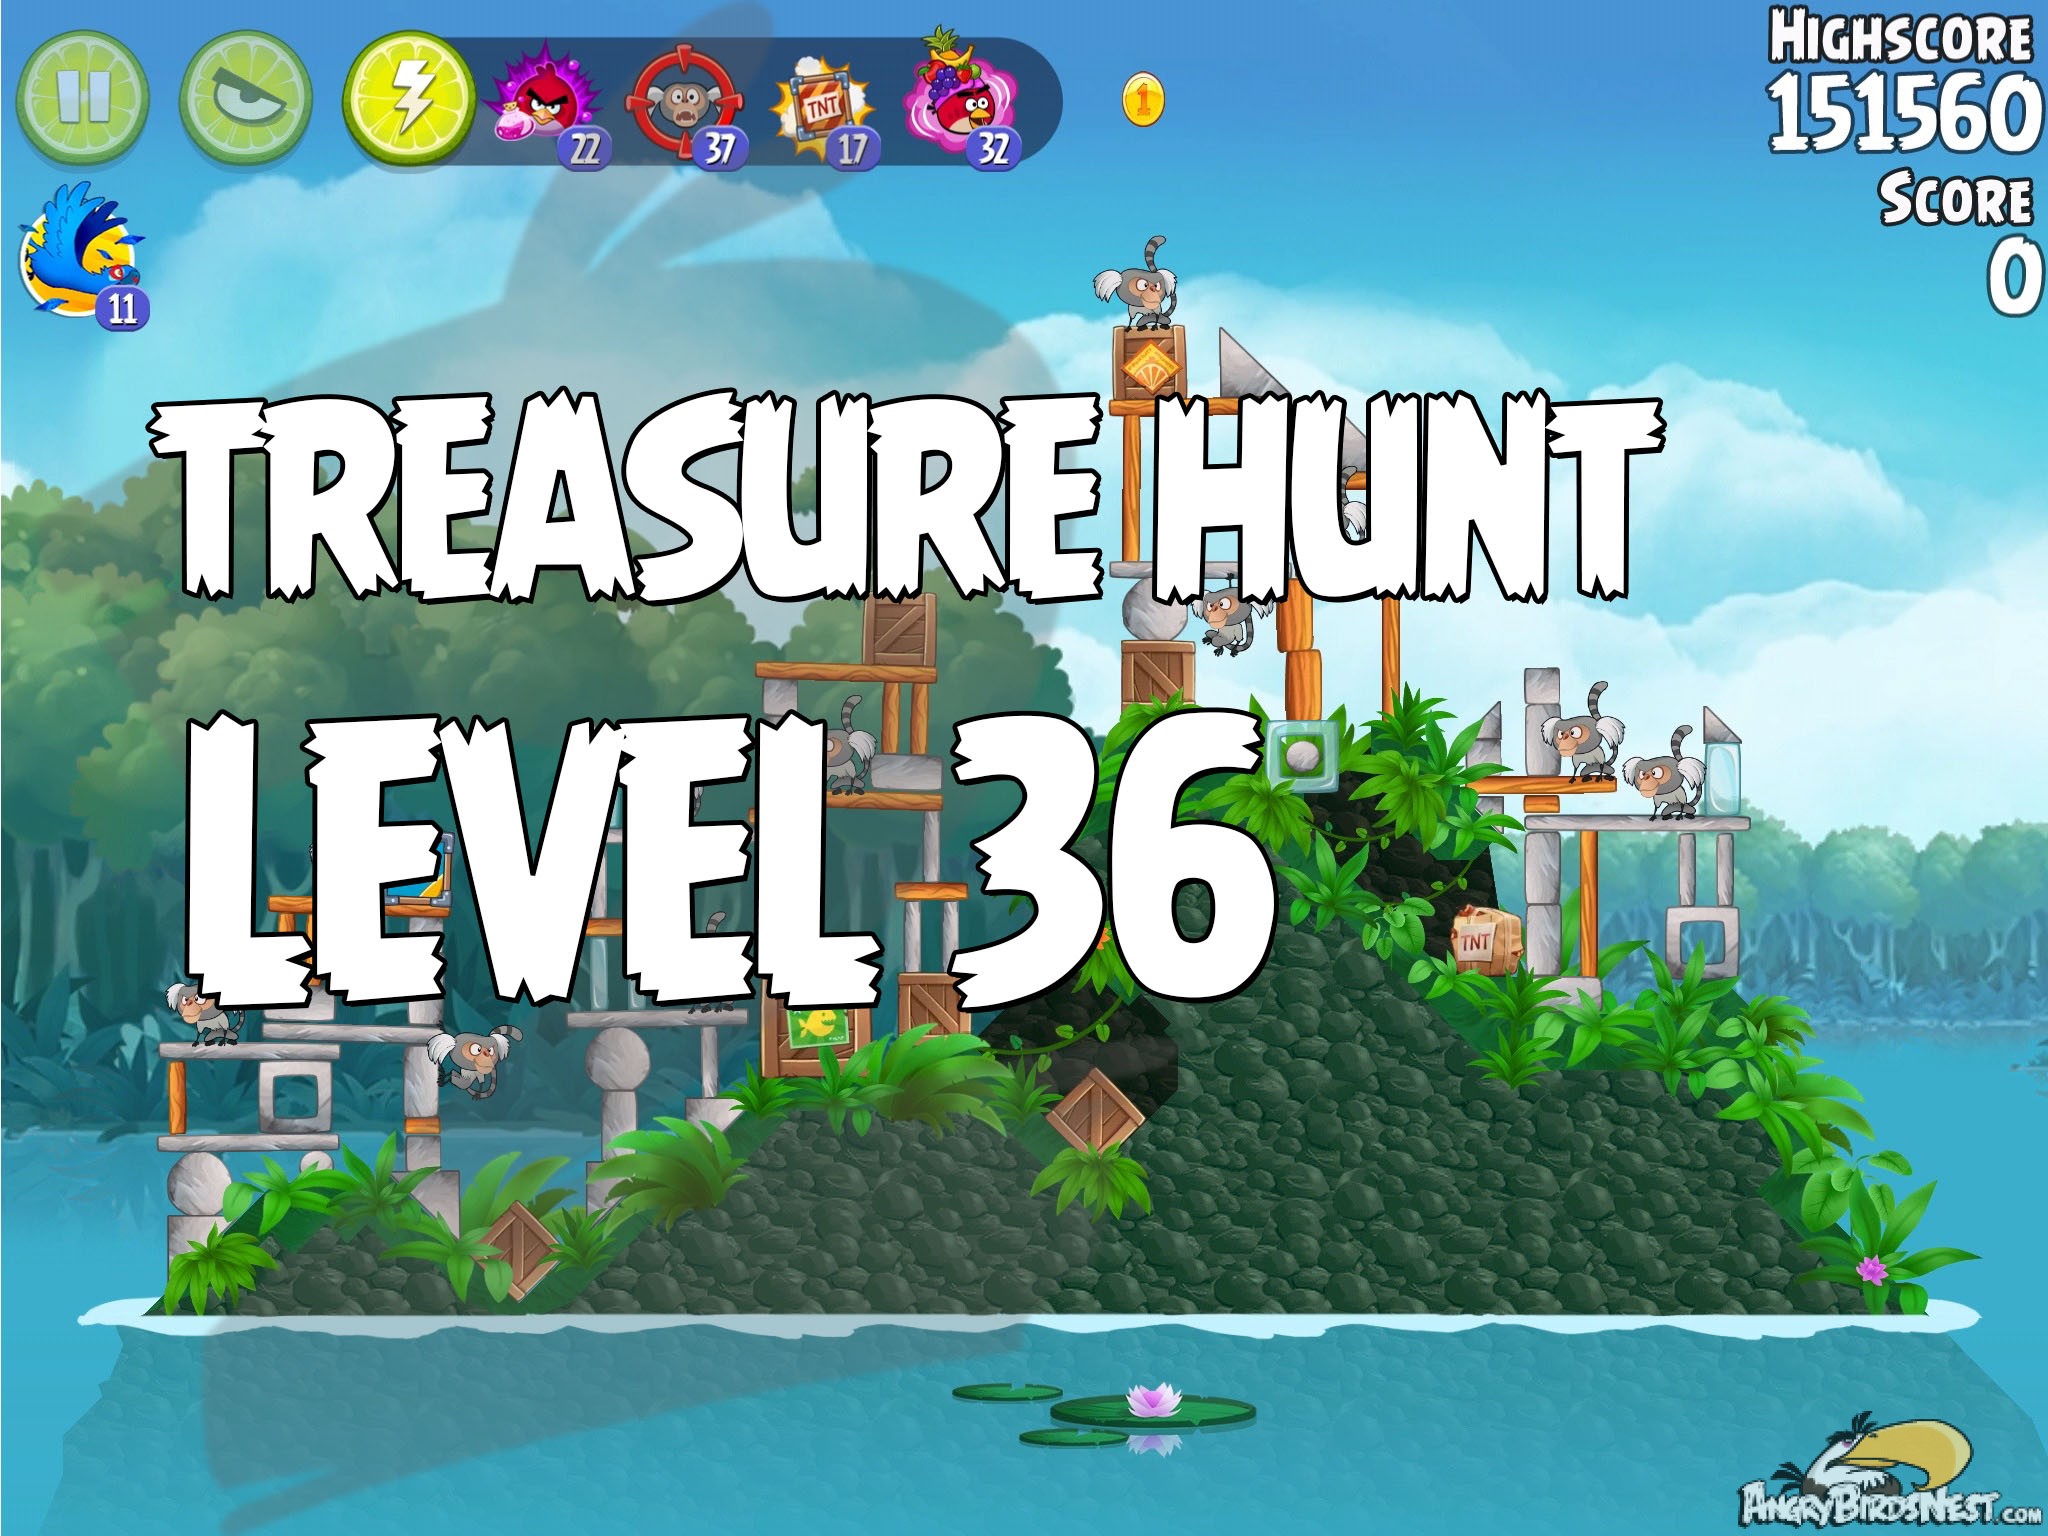 Angry Birds Rio Treasure hunt Level 36